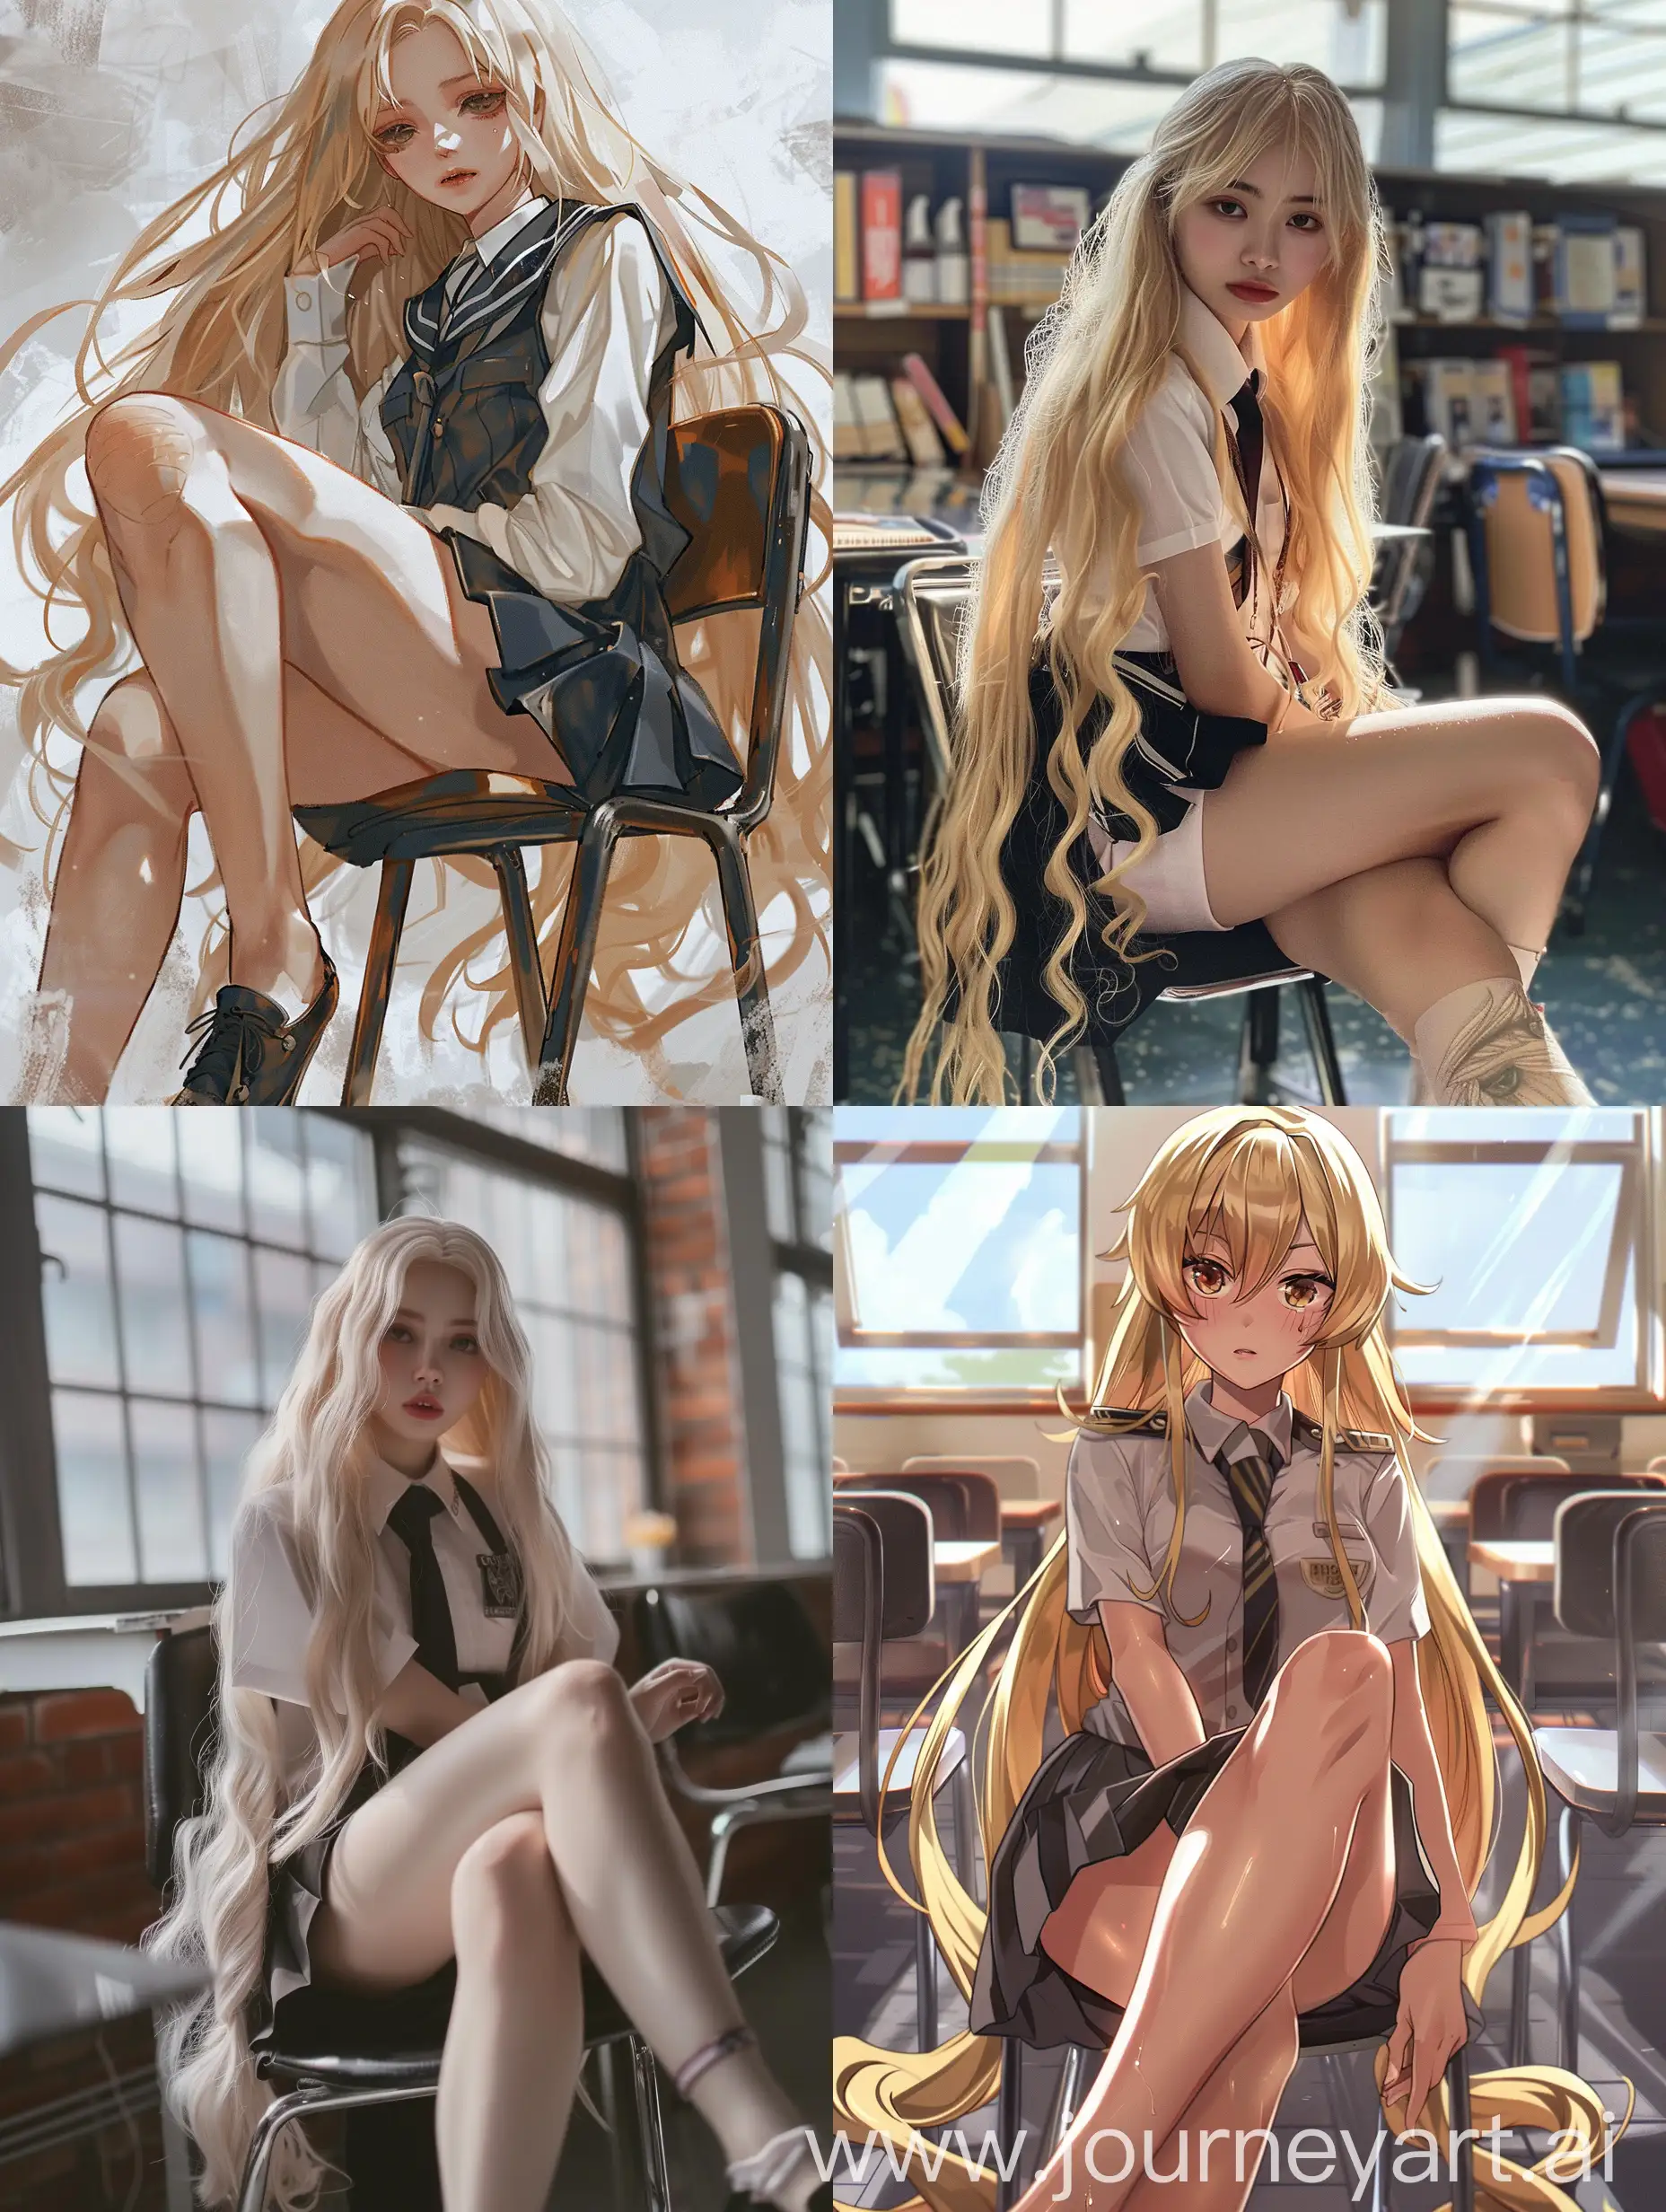 Influencer-Teen-Girl-with-Long-Blond-Hair-in-School-Uniform